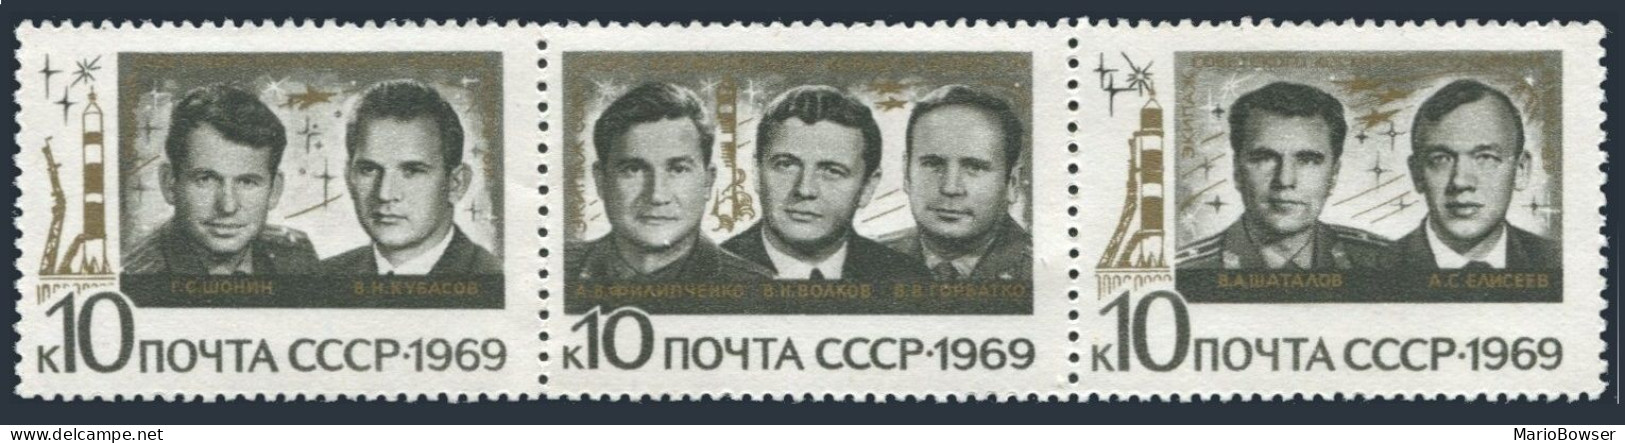 Russia 3655-3657 Singles,MNH.Michel 3682-3684. Group Flight Soyuz 6-7-8.1969. - Unused Stamps